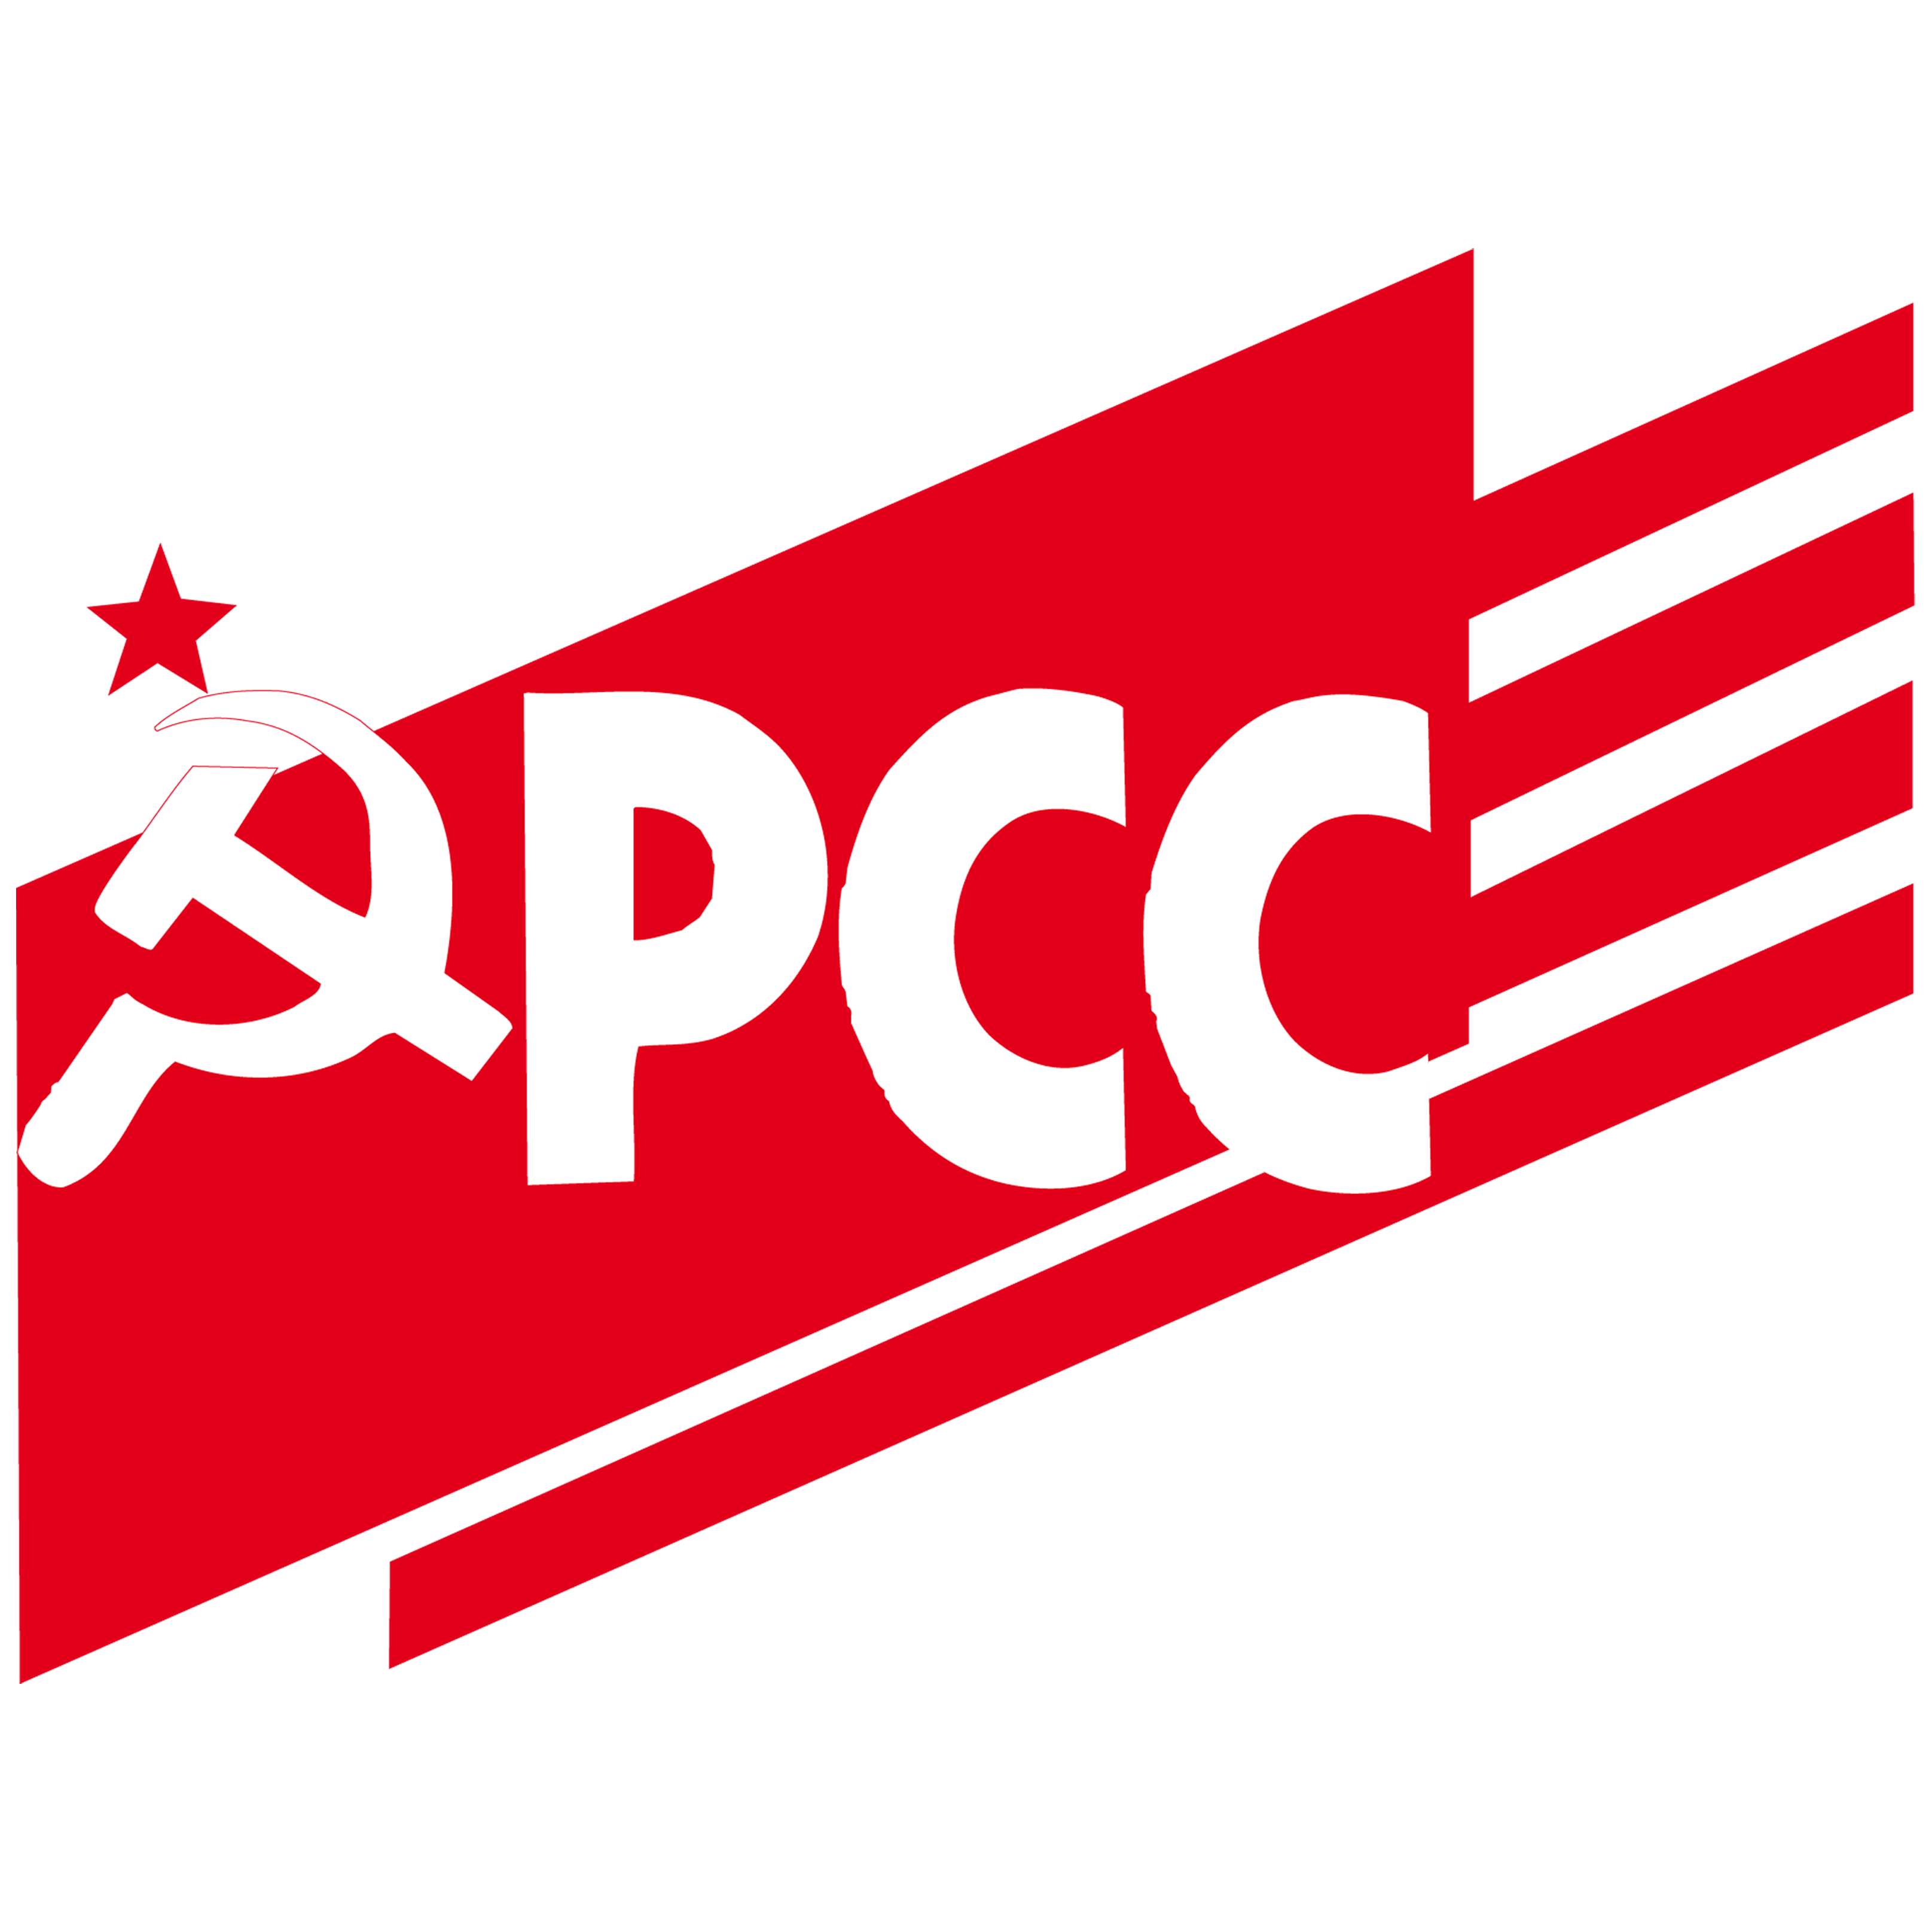 PCC Logo - File:Logo del PCC.png - Wikimedia Commons